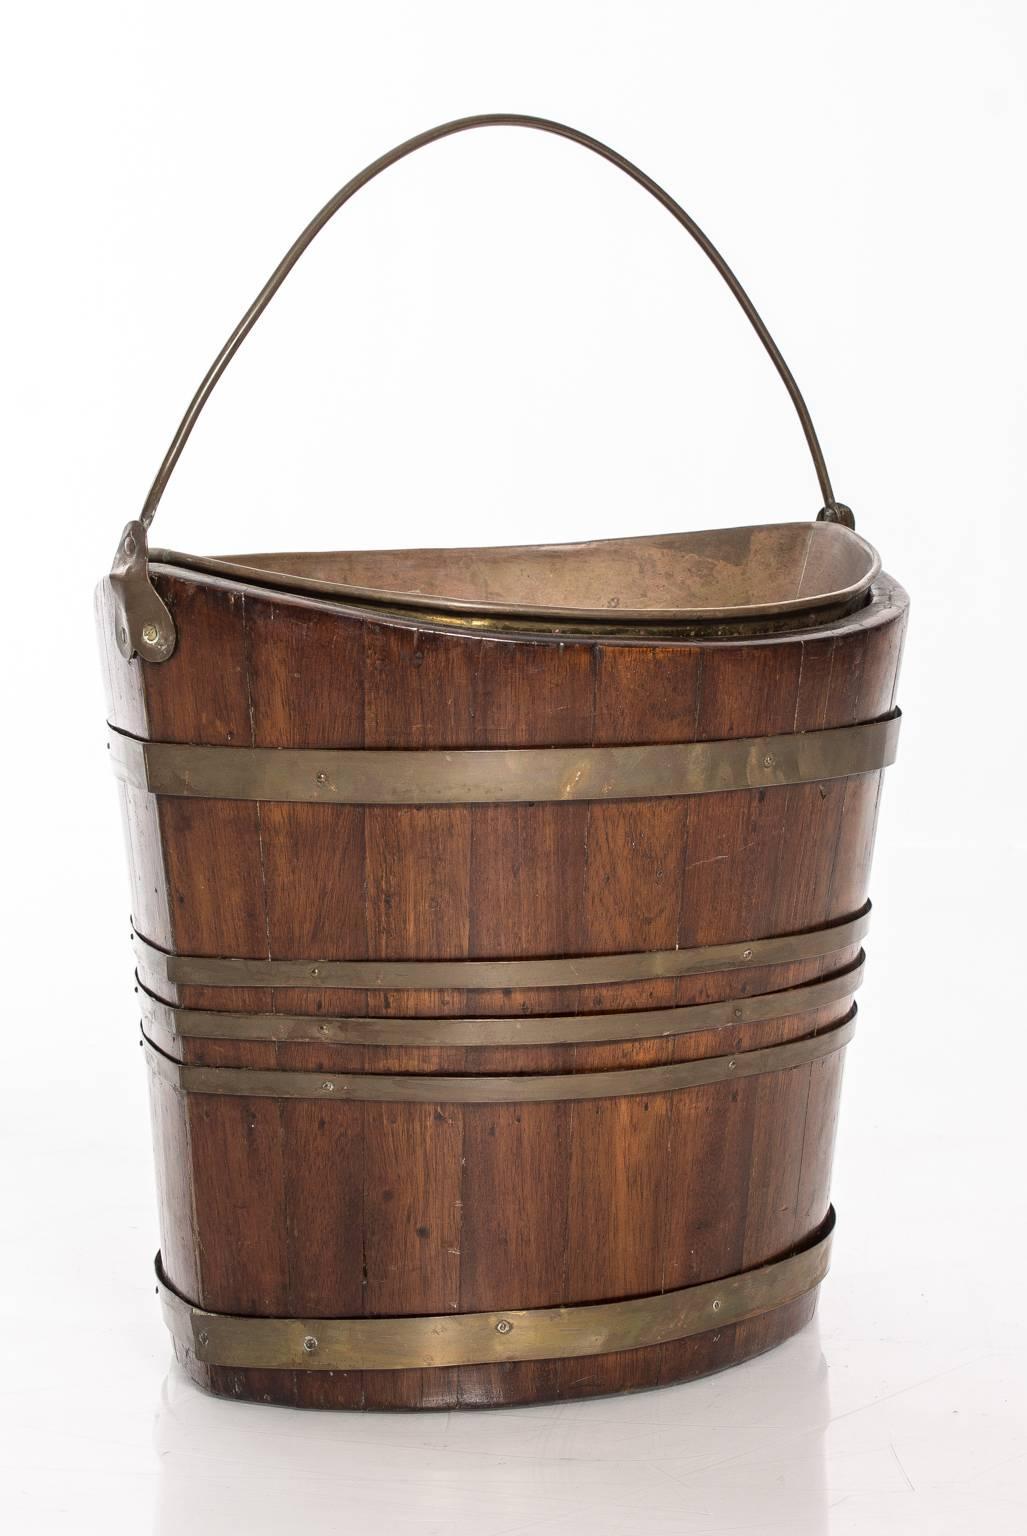 19th century English peat bucket.